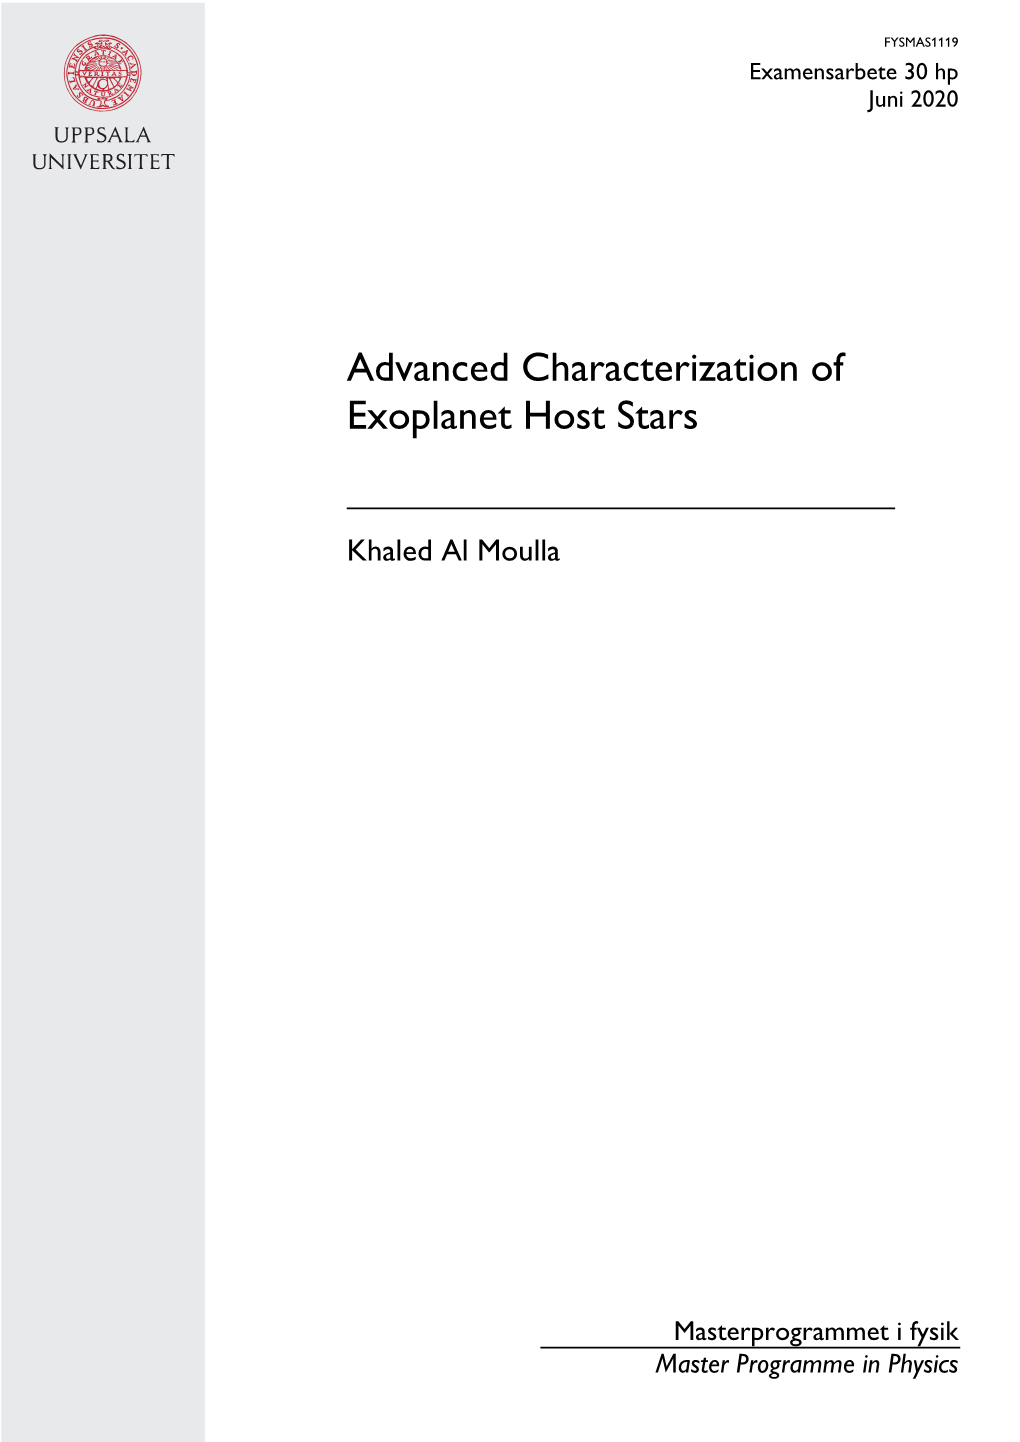 Advanced Characterization of Exoplanet Host Stars